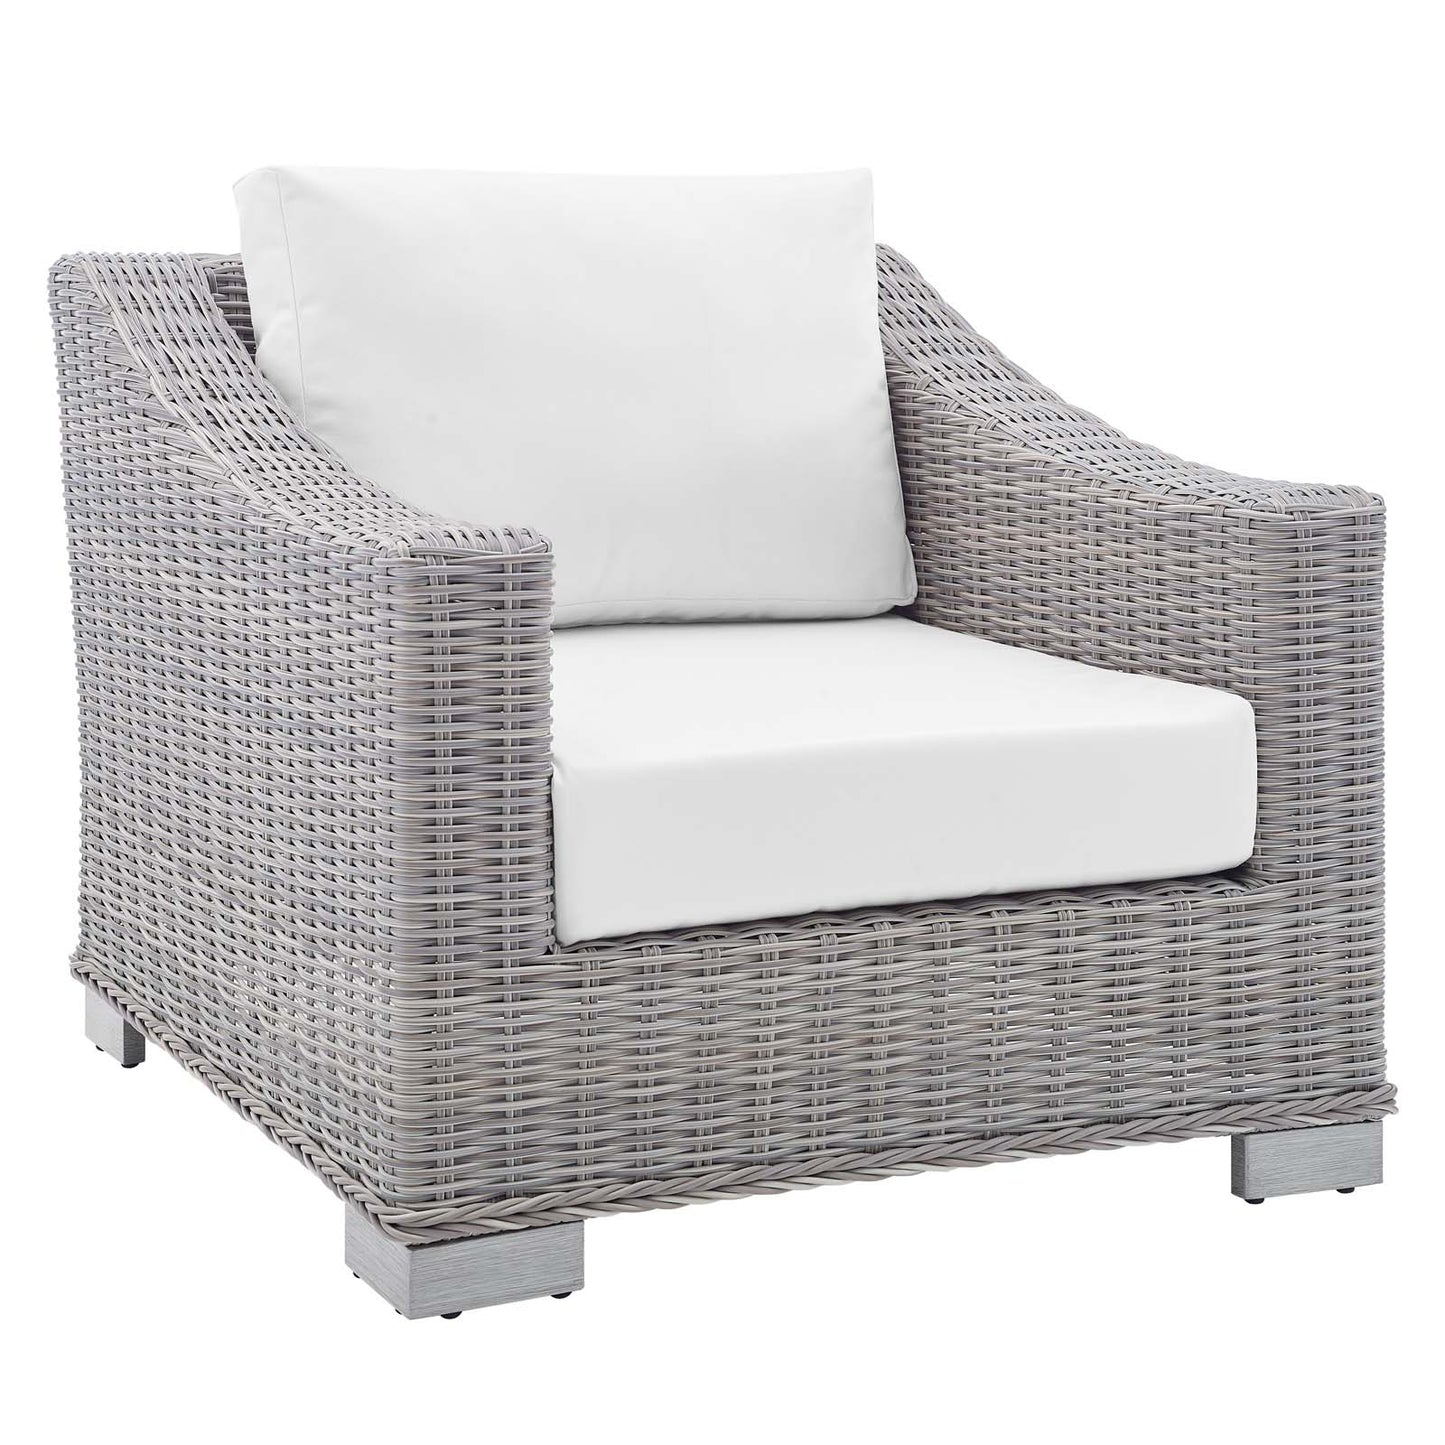 Conway Sunbrella® Outdoor Patio Wicker Rattan 4-Piece Furniture Set Light Gray White EEI-4359-LGR-WHI